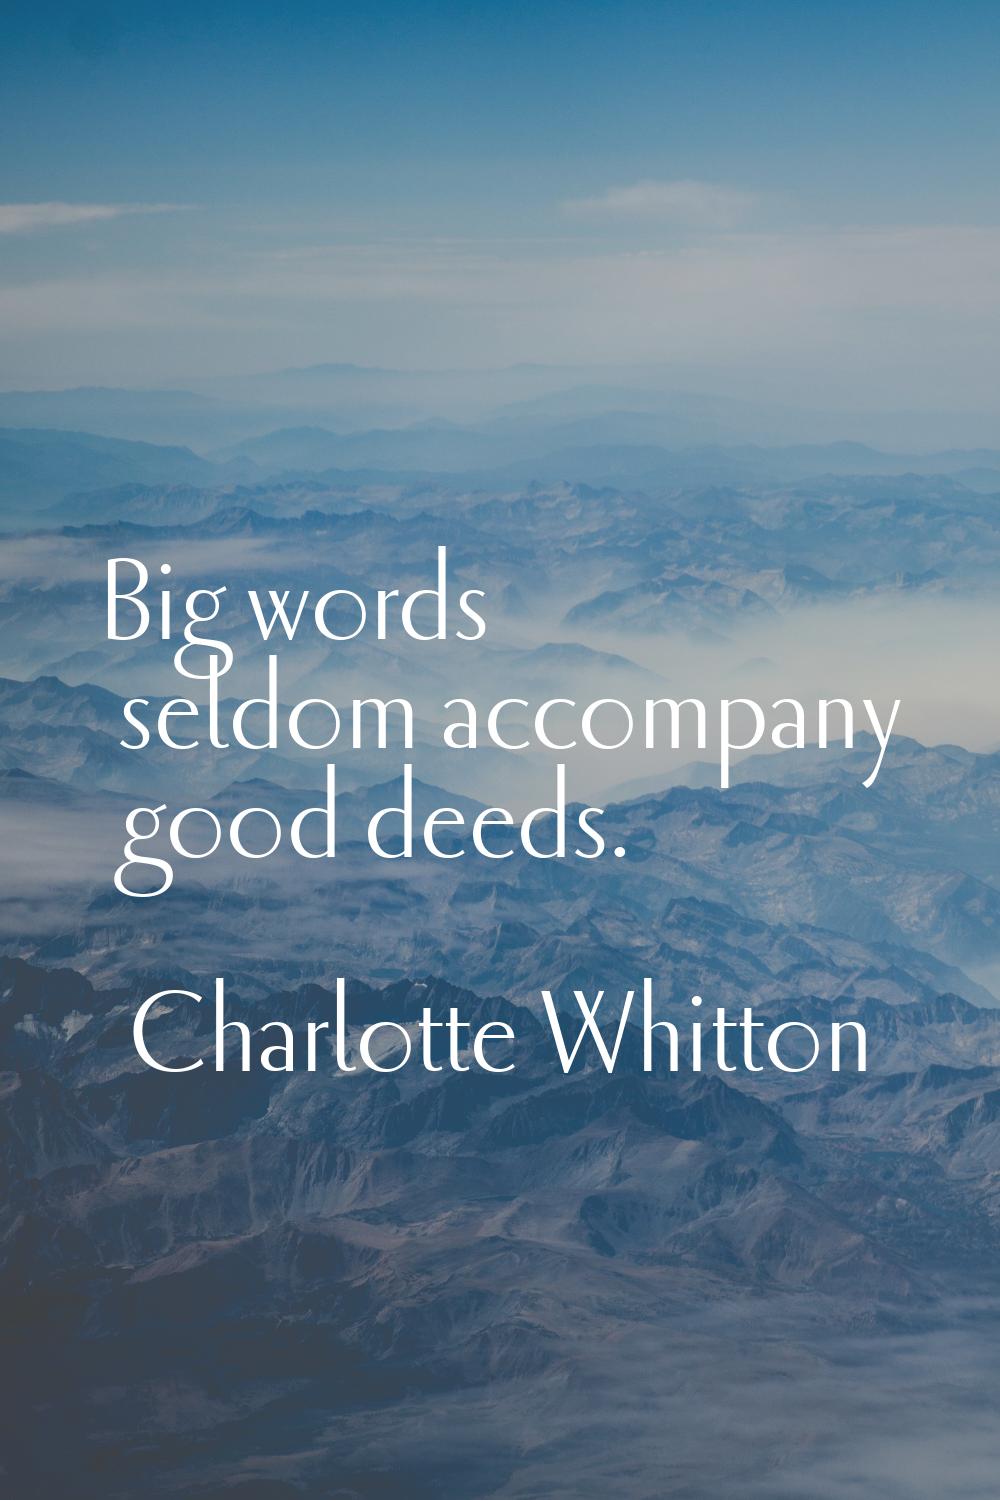 Big words seldom accompany good deeds.